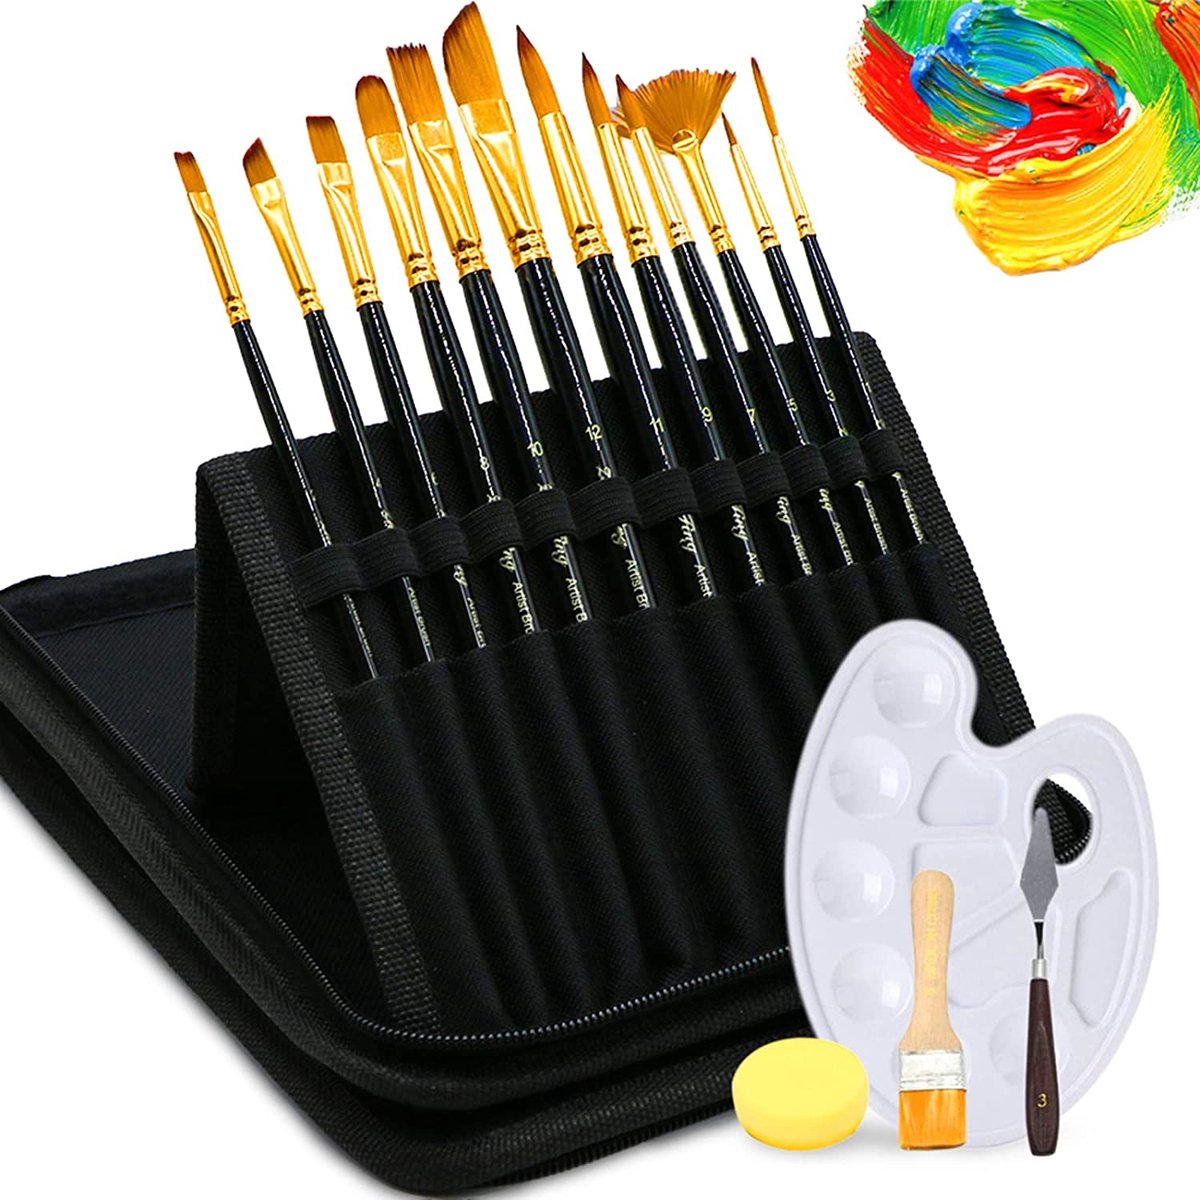 Verf Kwasten - verfroller - Acrylverven -aint brush roll - paint stuff - Verf Borstels Set - Paint Brushes Set12